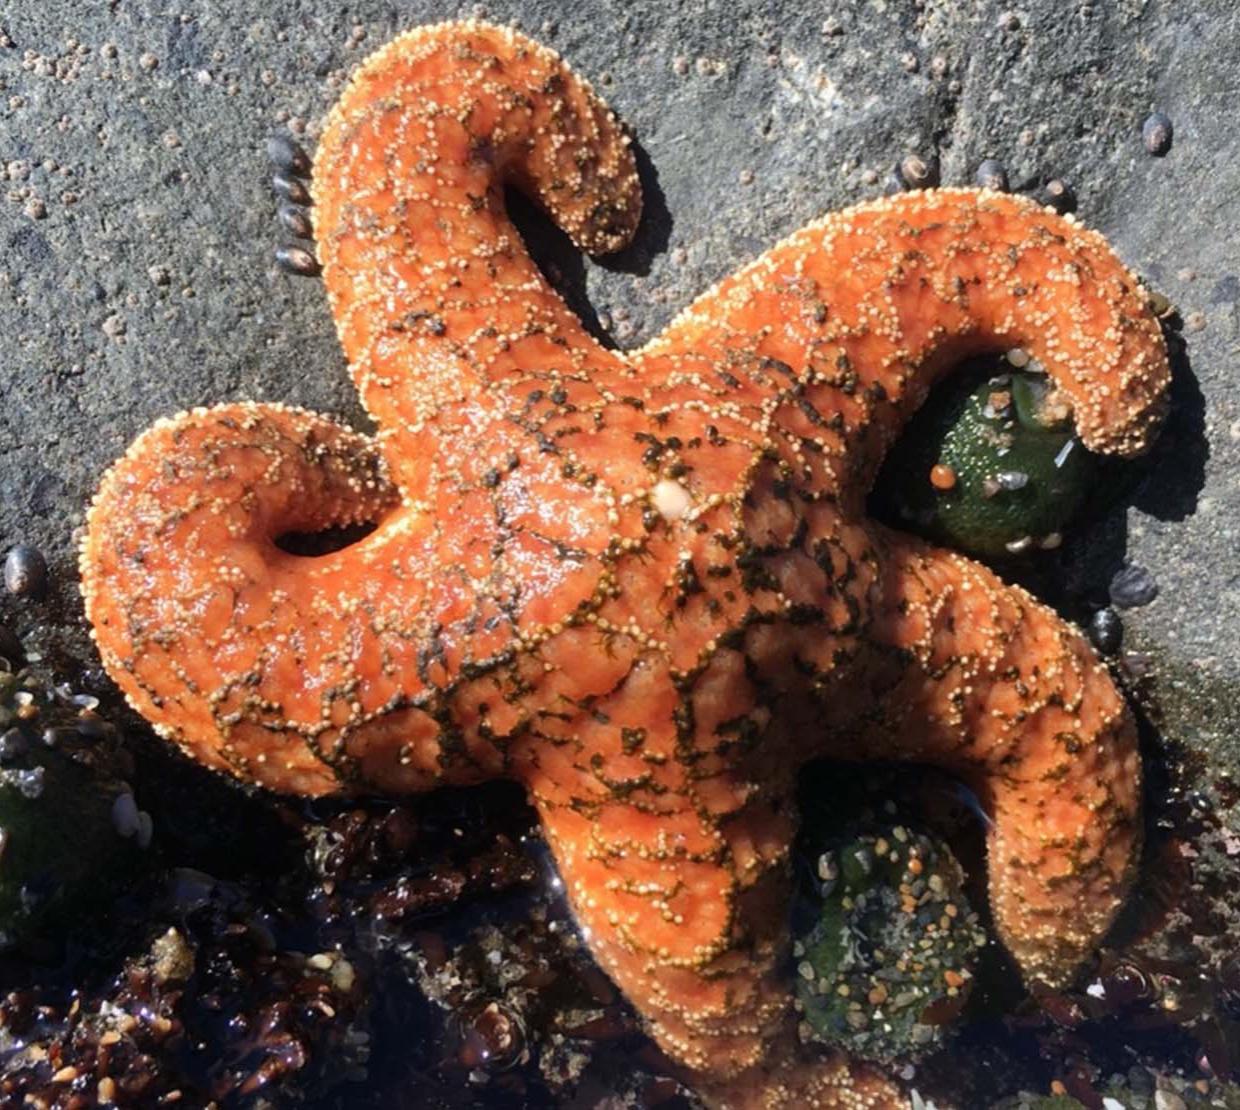 A healthy bright orange sea star clinging to a rock